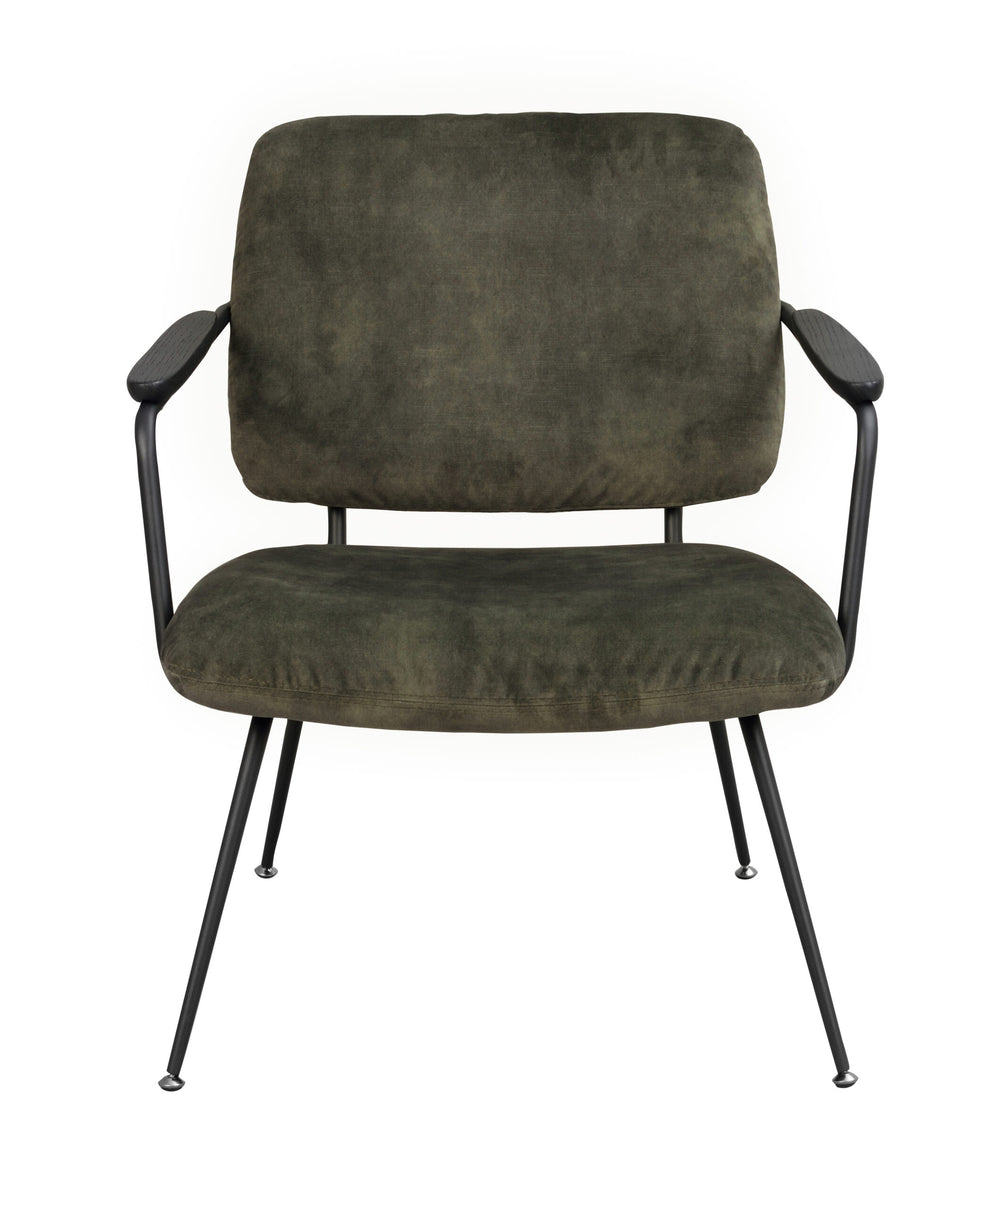 120115_a, Prescott lounge chair green_black